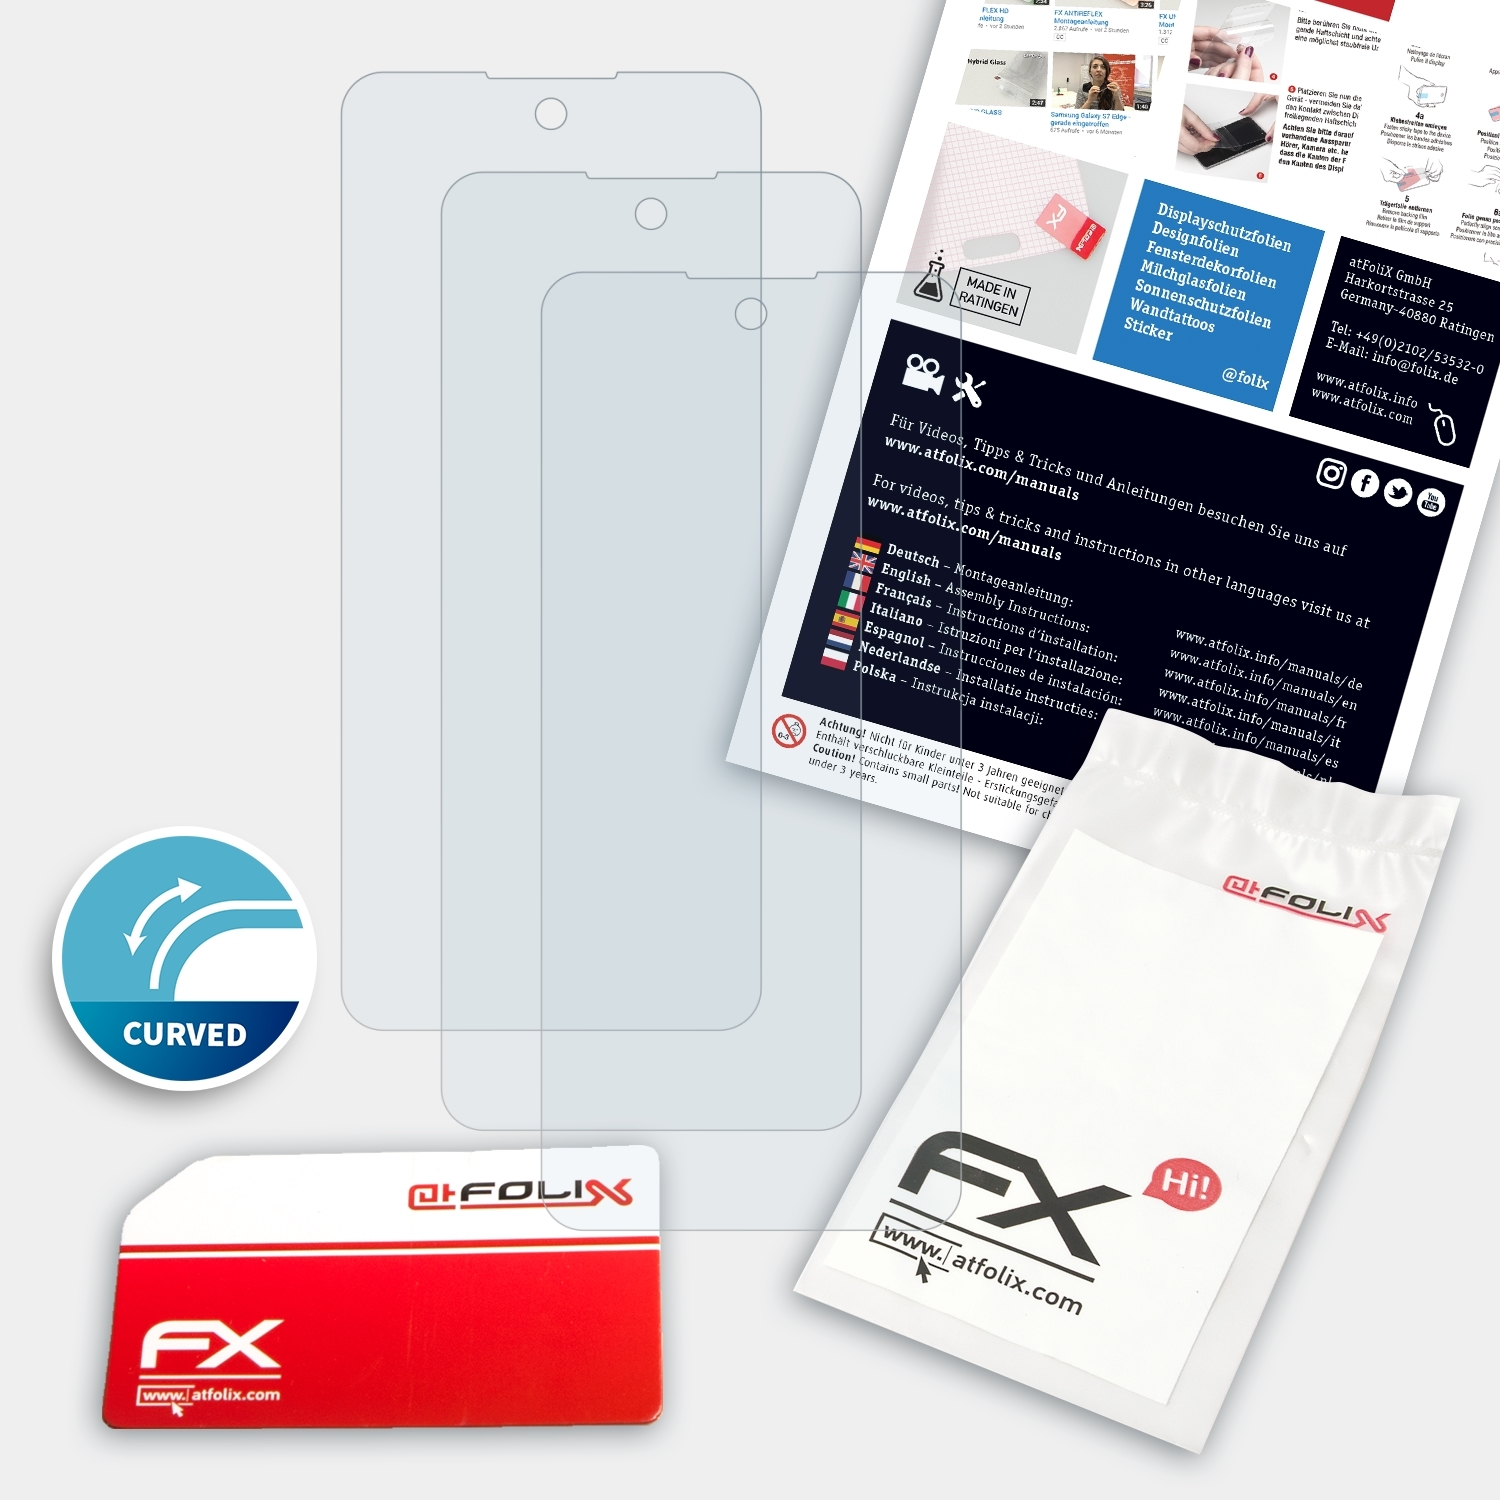 ATFOLIX 3x FX-ActiFleX Moto Displayschutz(für G60S) Motorola